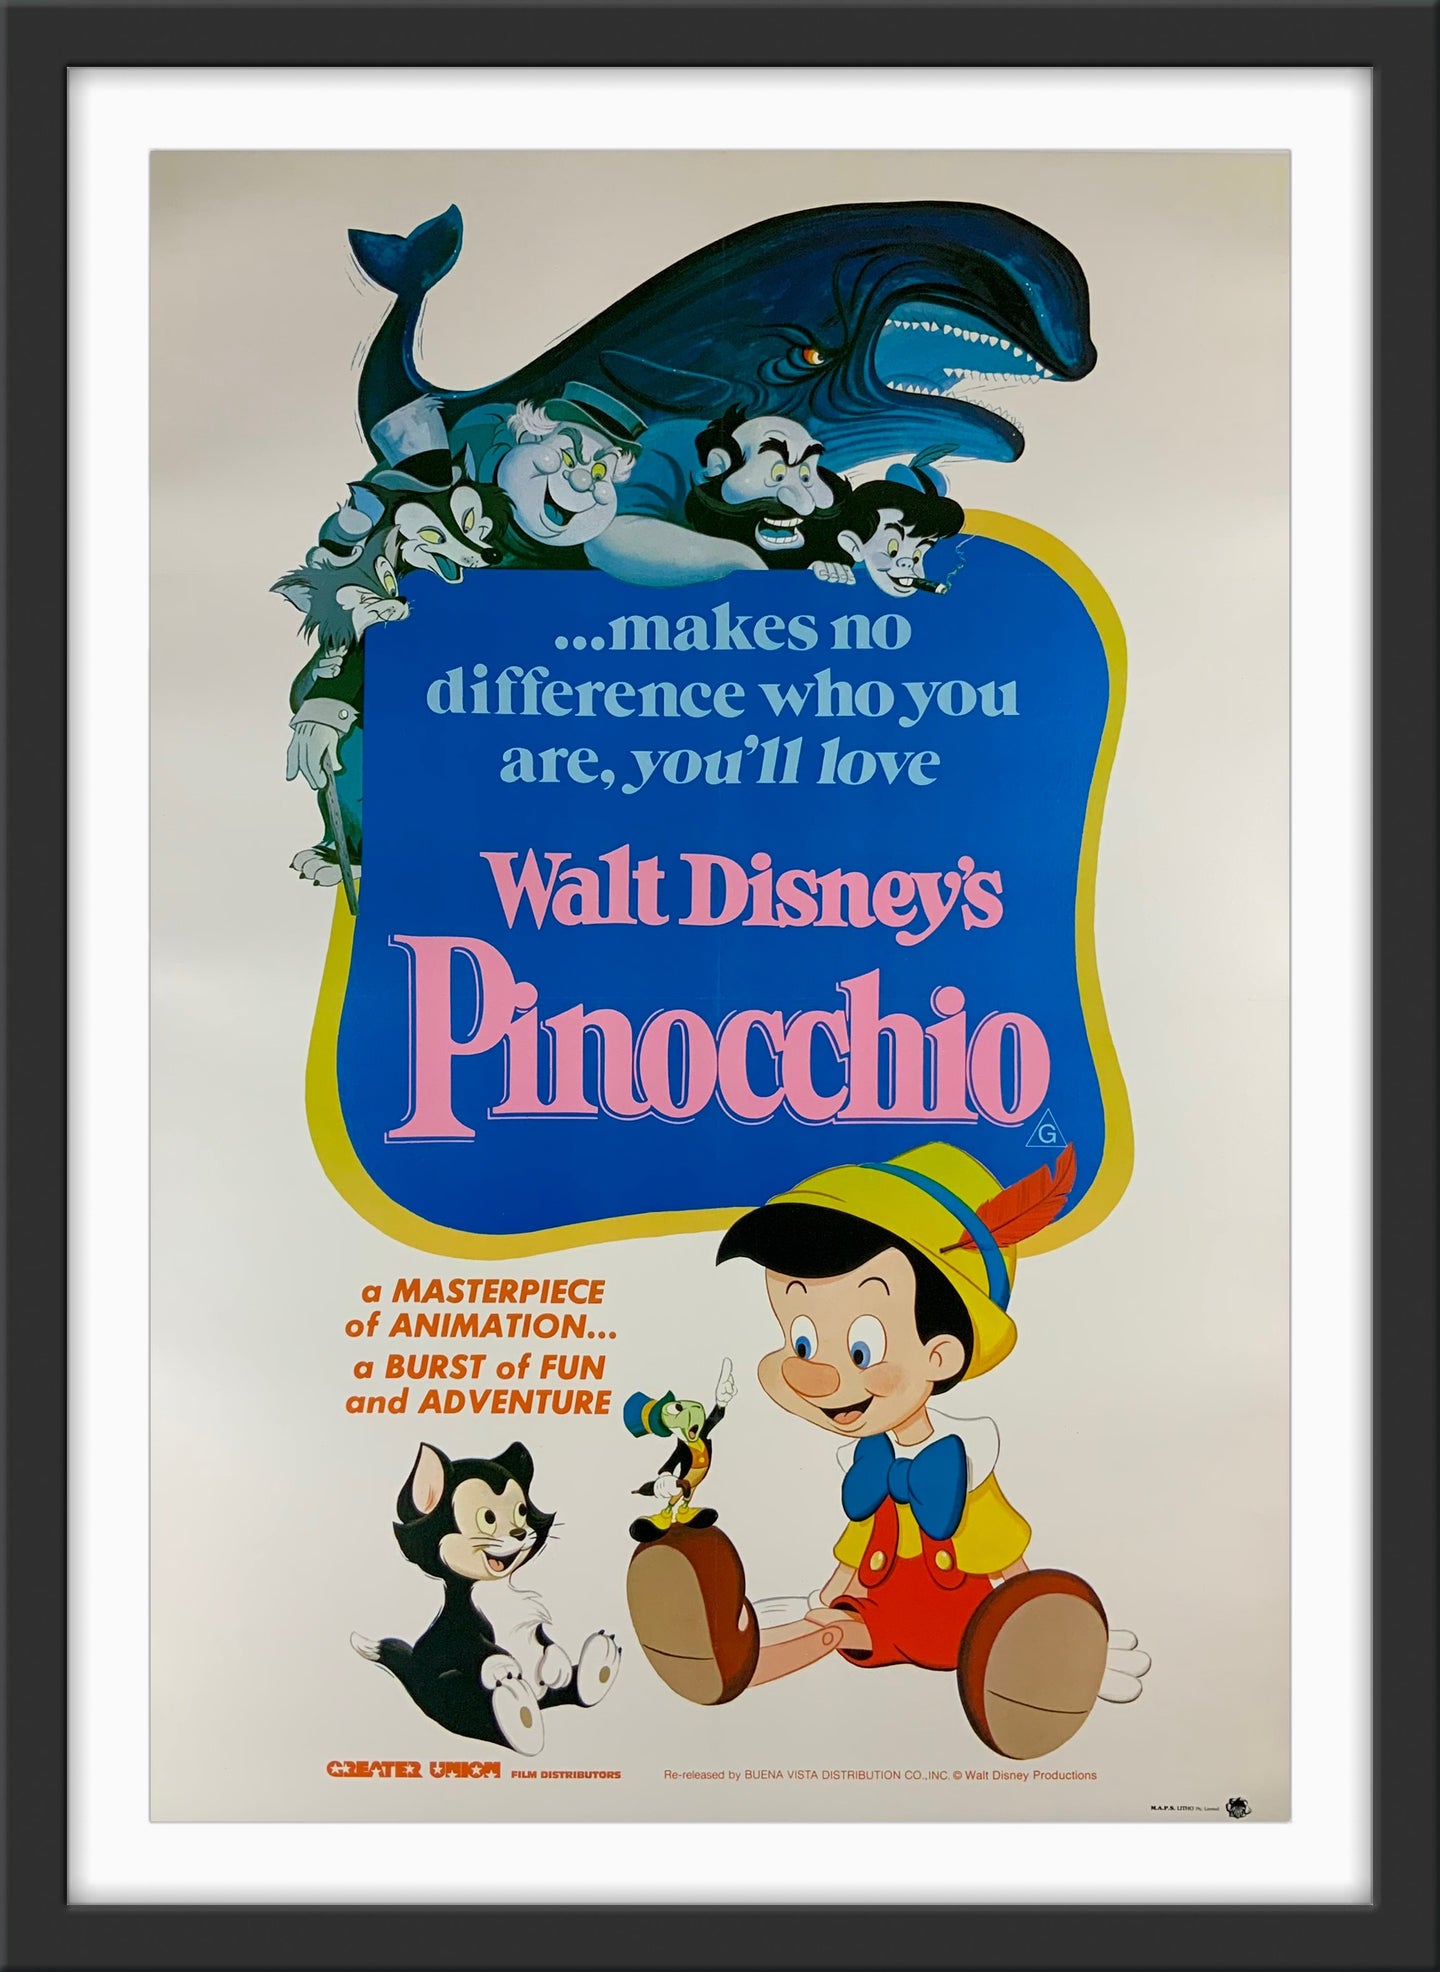 An original movie poster for the Disney animated film Pinocchio